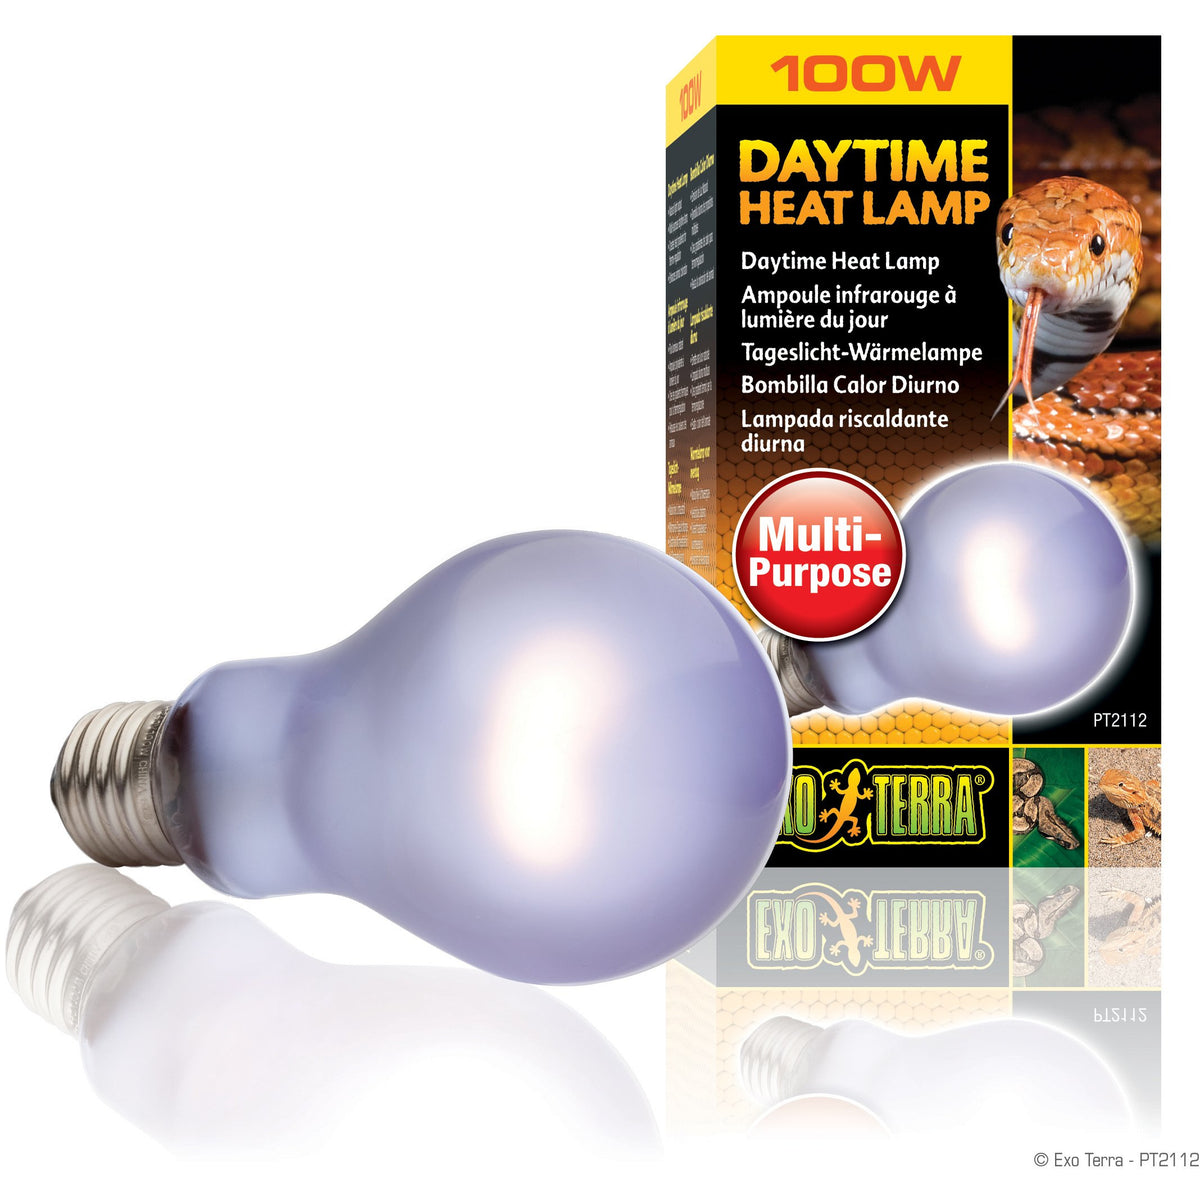 Exo Terra Daytime Heat Lamp - A19 / 60 W